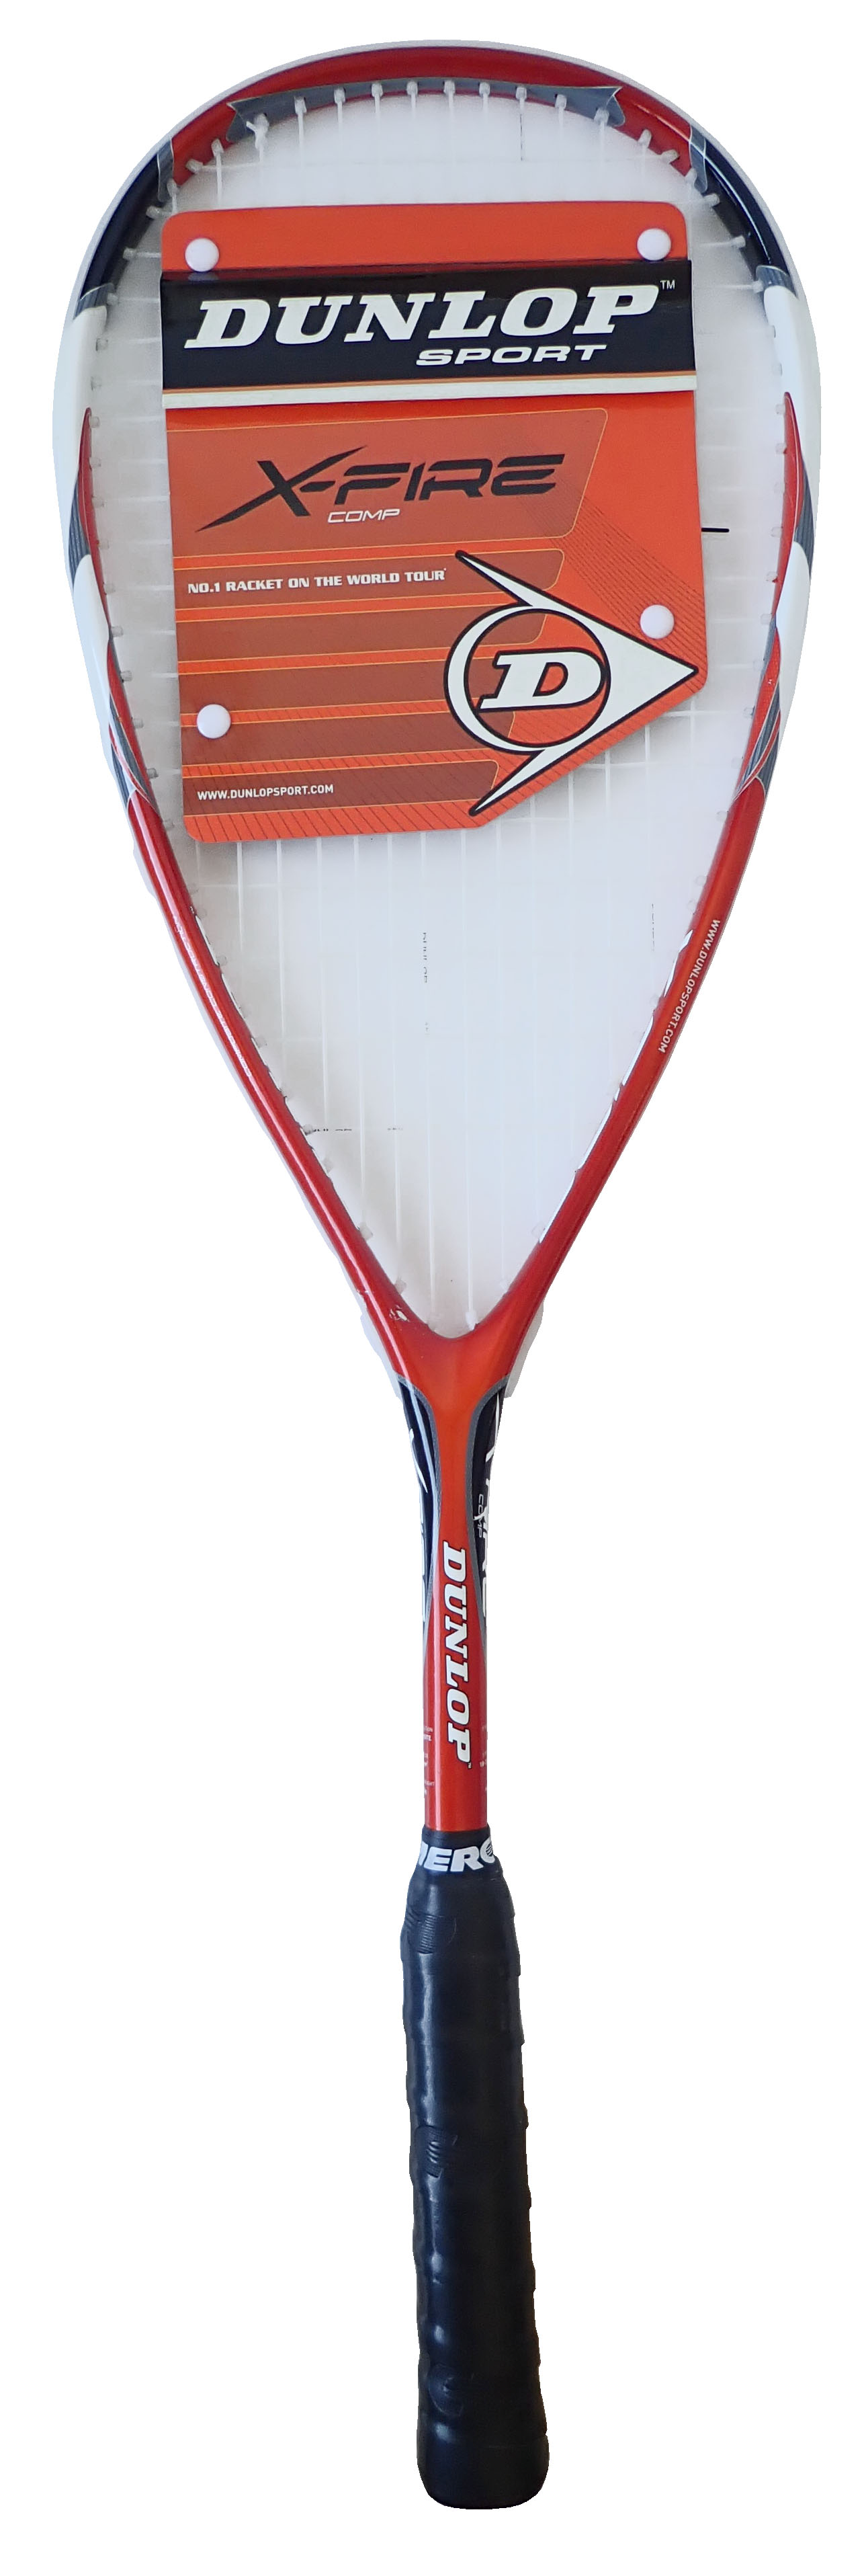 Dunlop Raketa squashová kompozitová G2451CRV červená